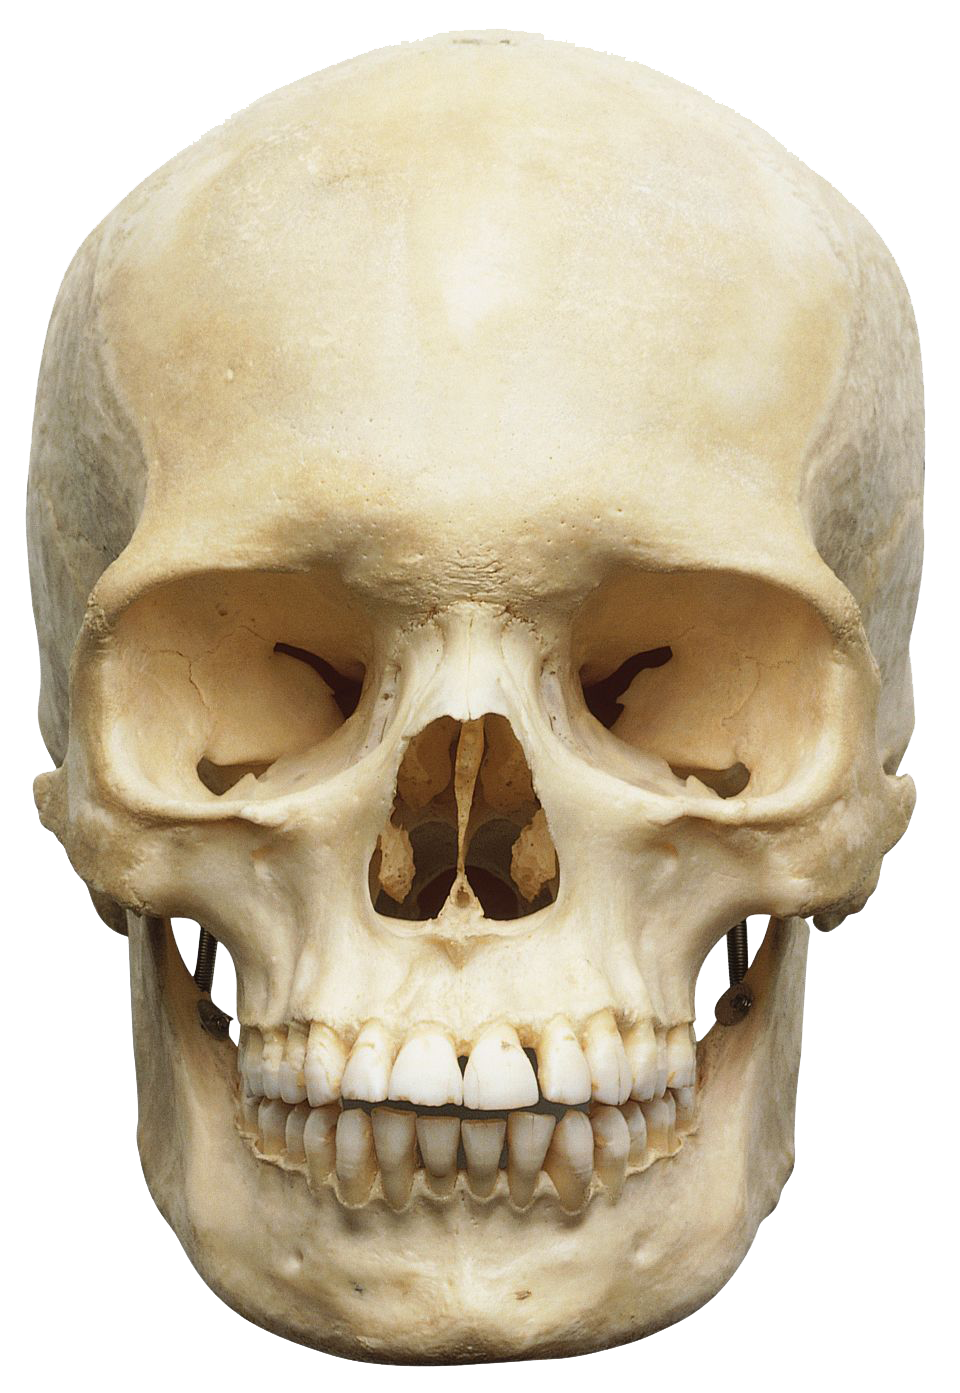 Download Skeleton Head PNG images transparent gallery. , PNG Skeleton Head - Free PNG